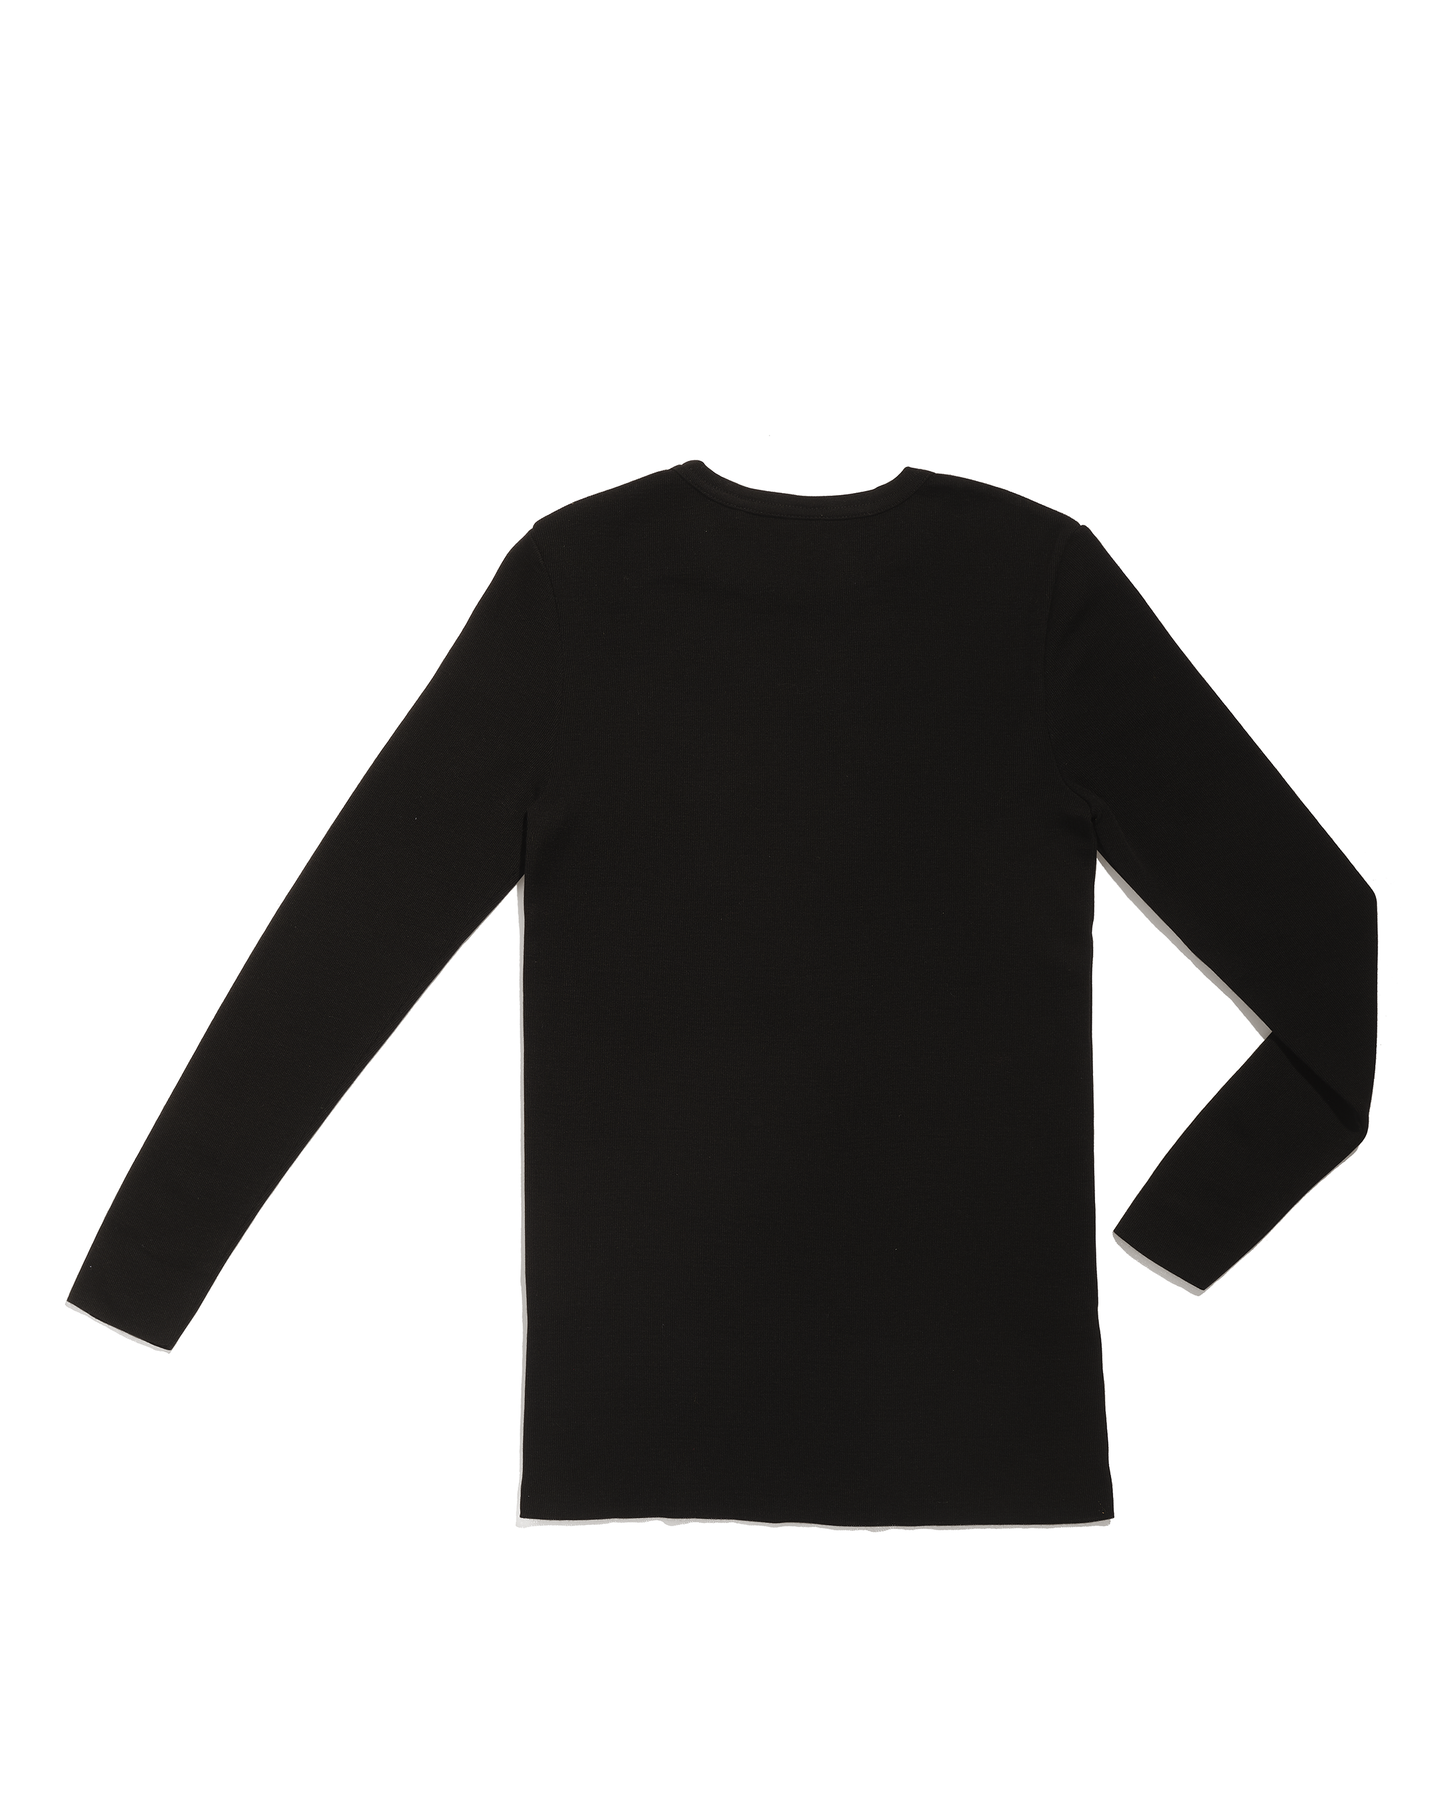 Black 100% merino long-sleeved sweater